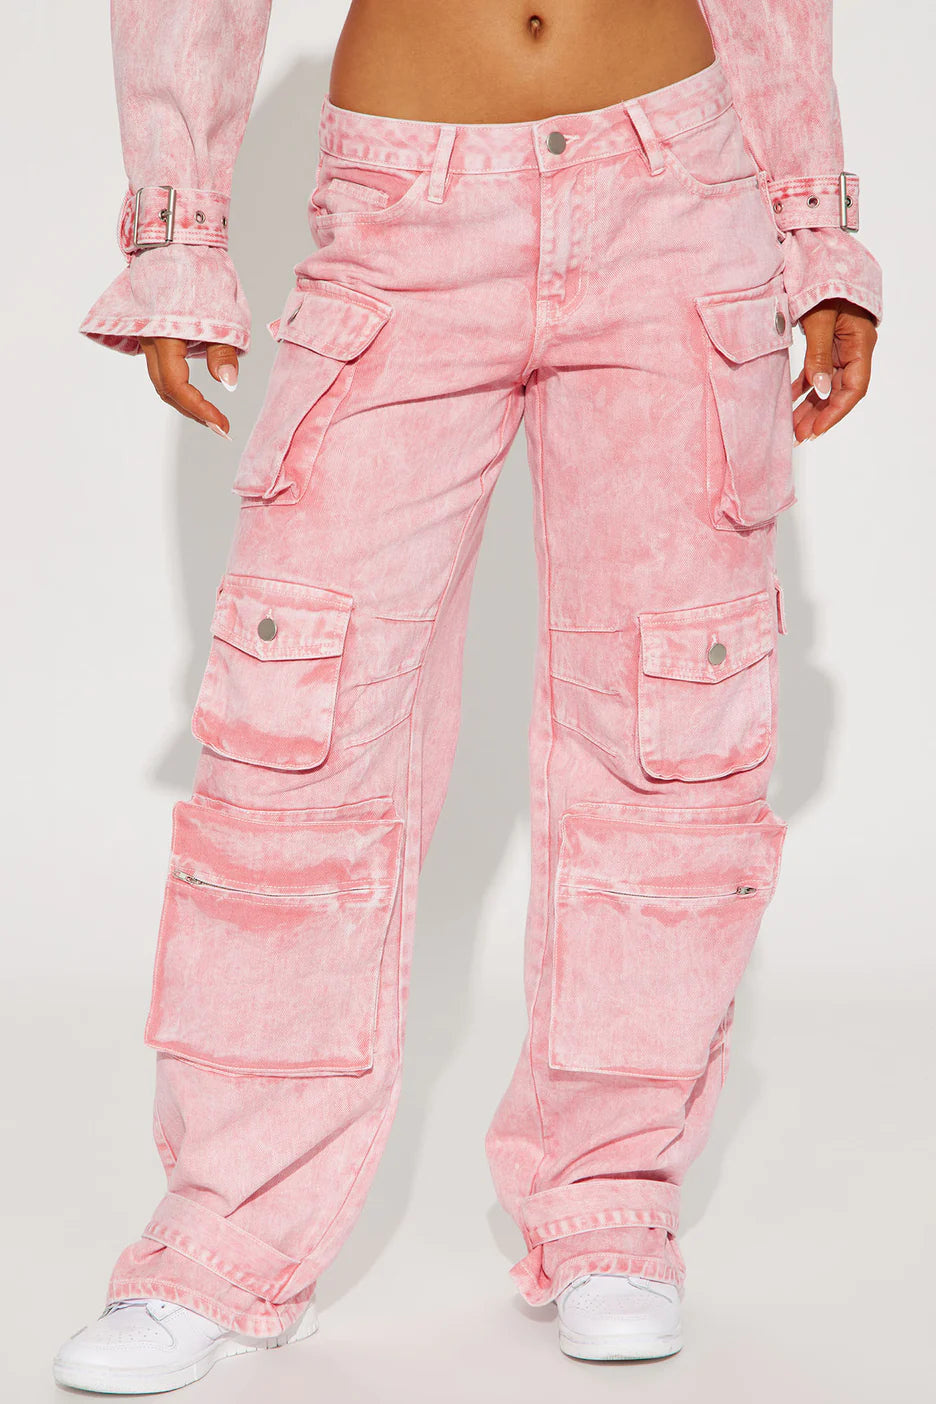 Fashionnova Billie Low Slung Cargo Jeans